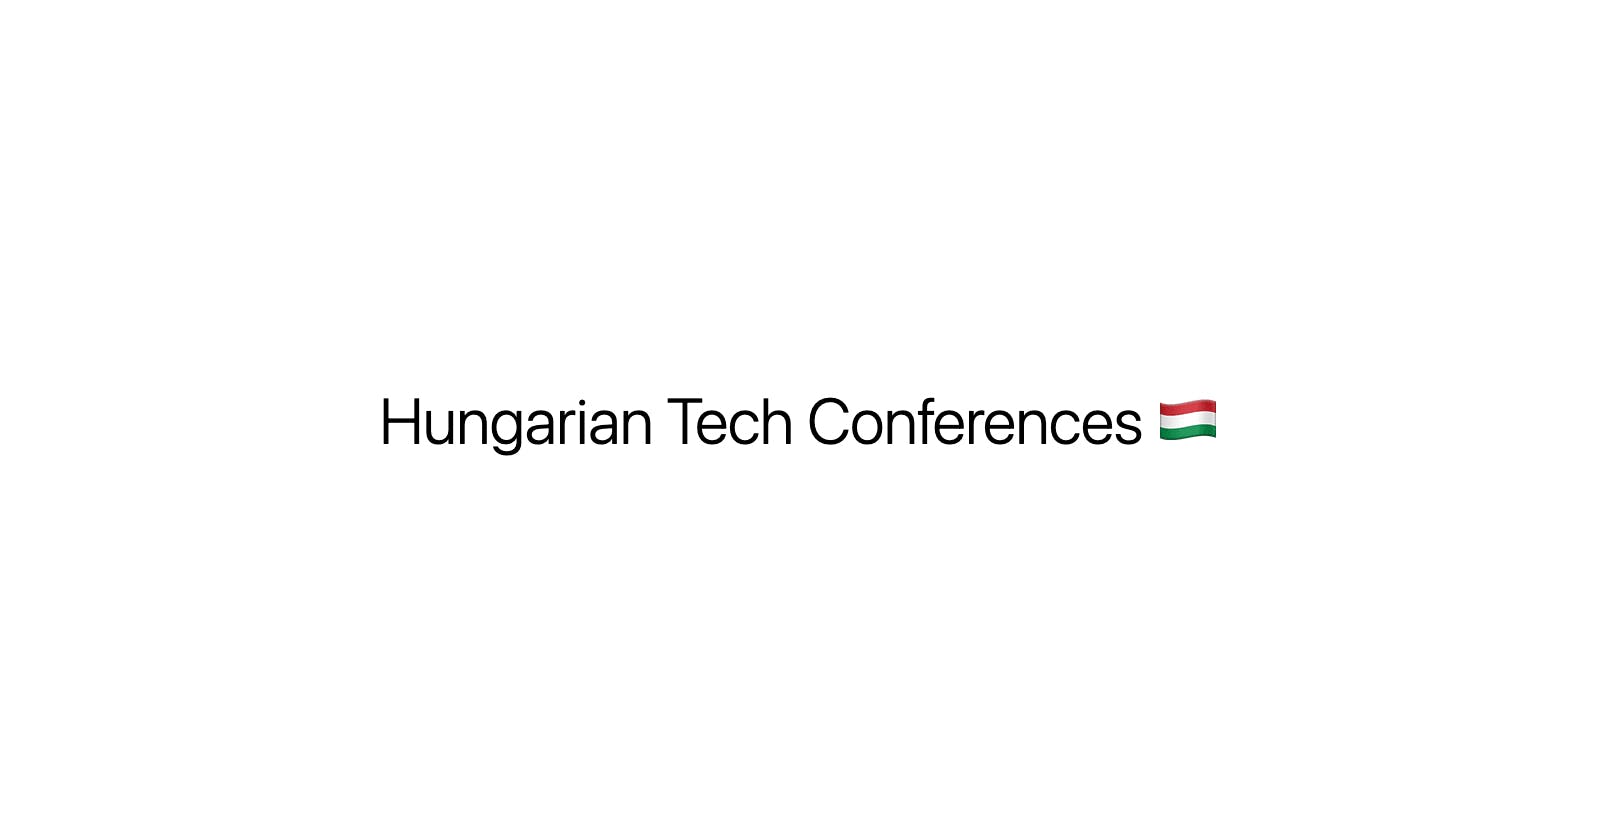 Bringing together Hungarian technology conferences